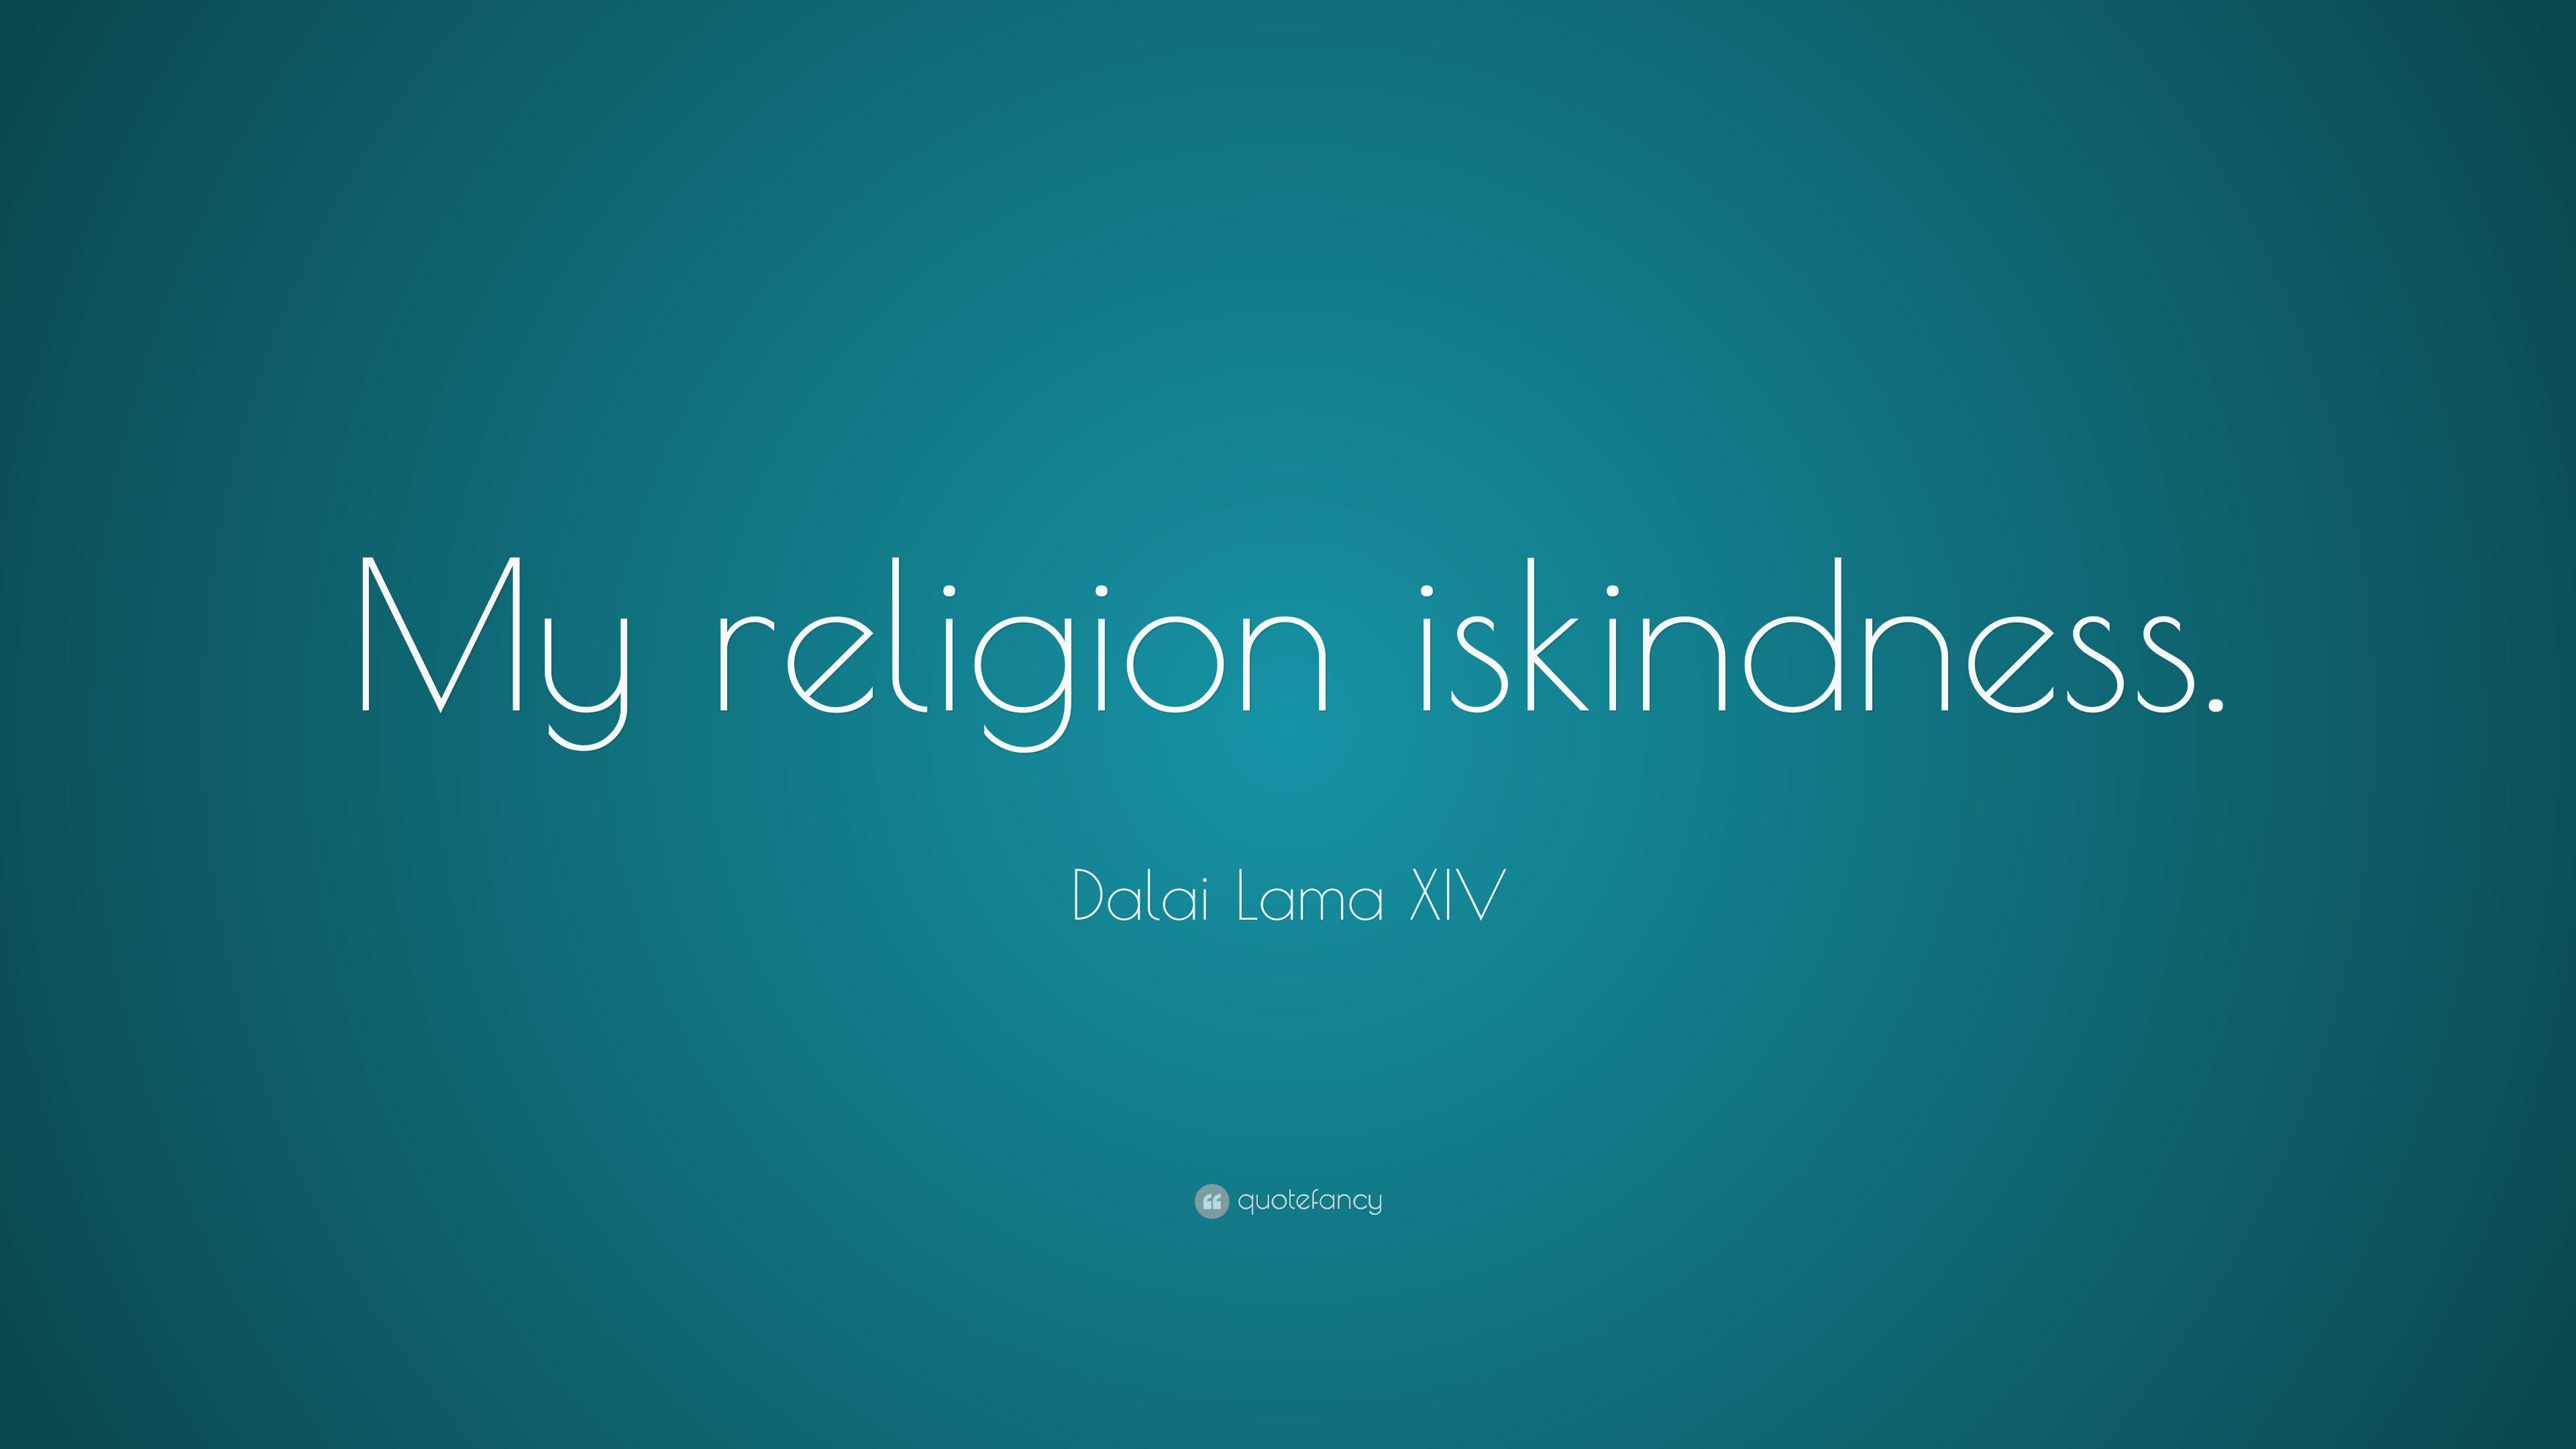 Dalai Lama XIV Quote: “My religion is kindness.” 15 wallpaper